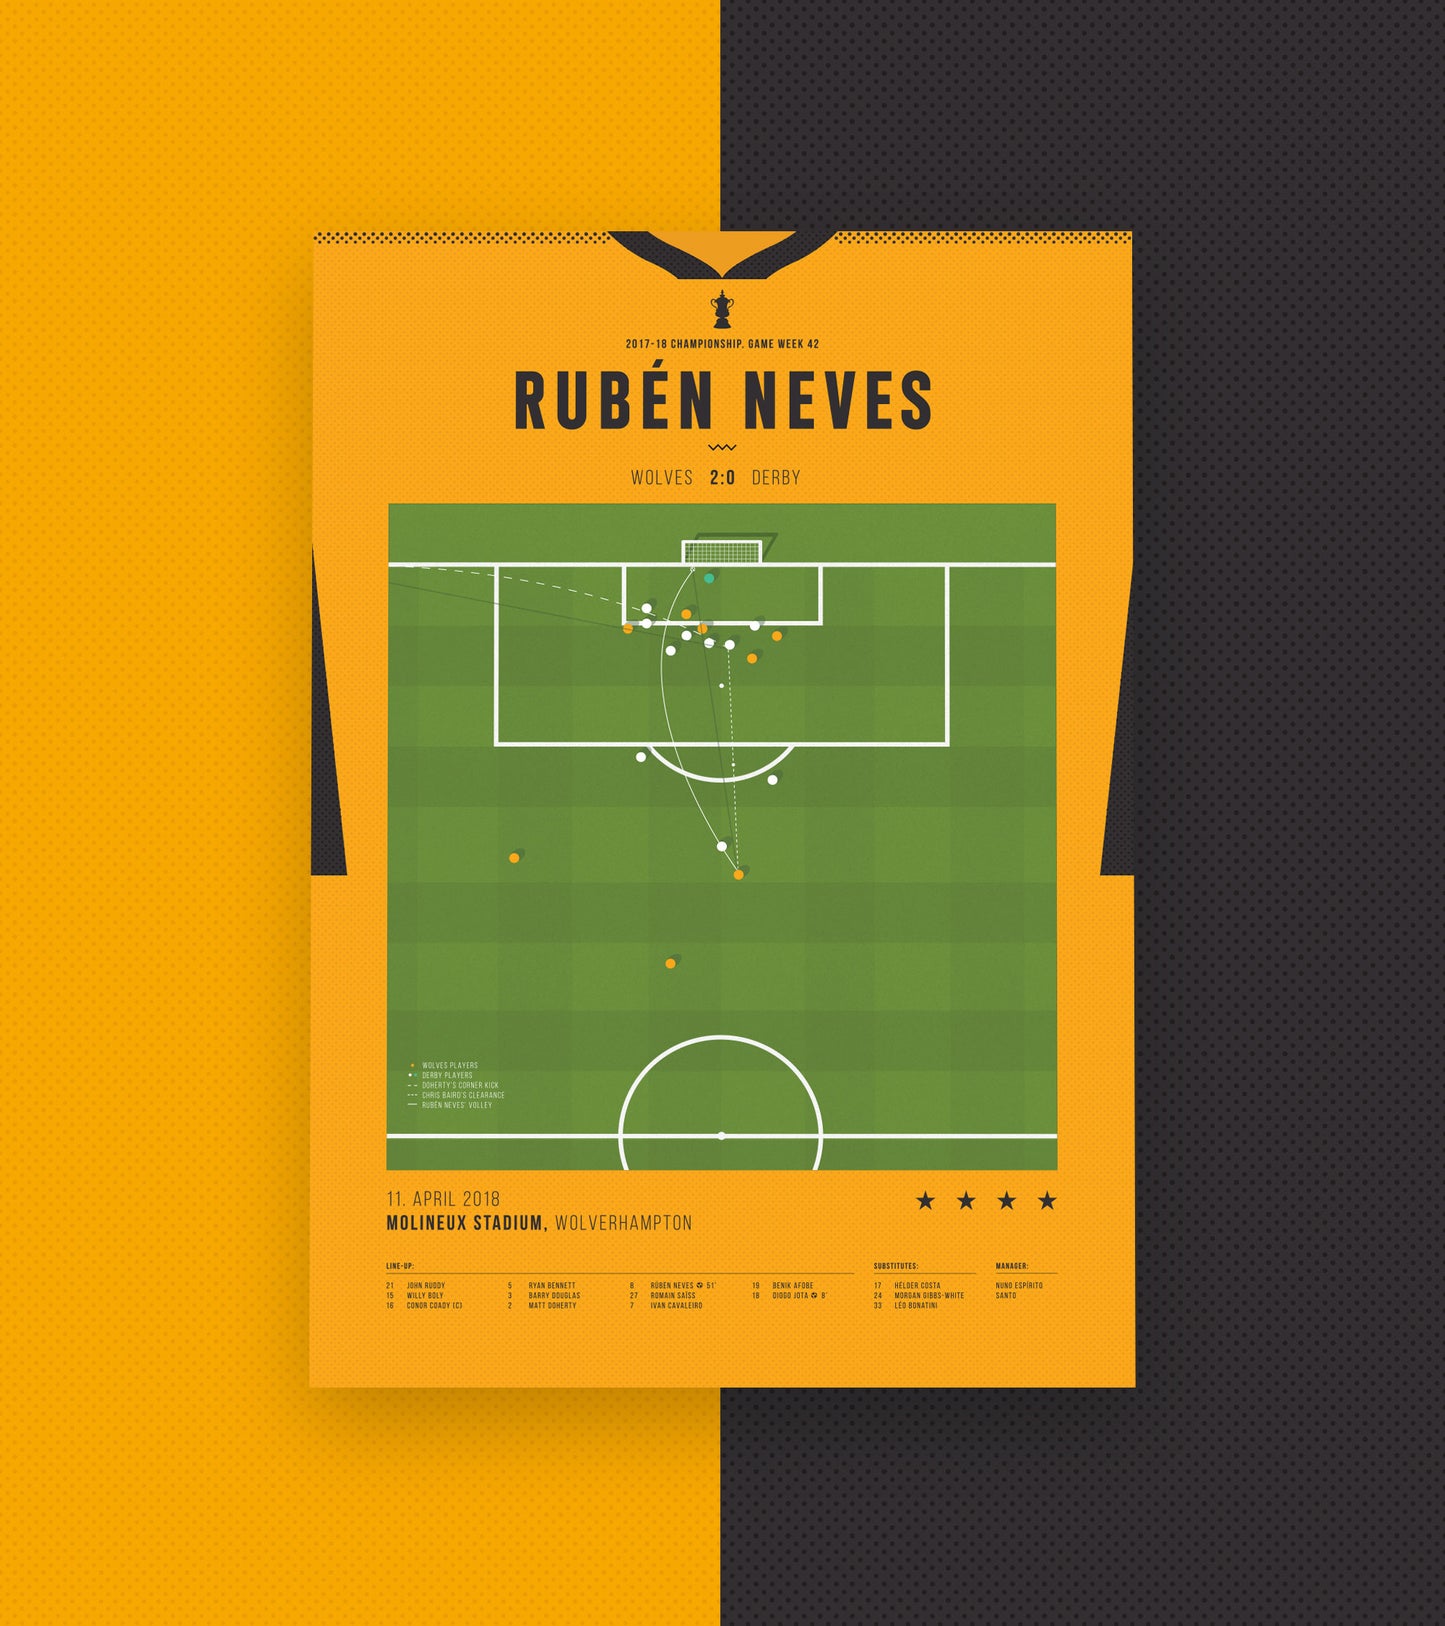 Ruben Neves incredible volley goal vs Derby